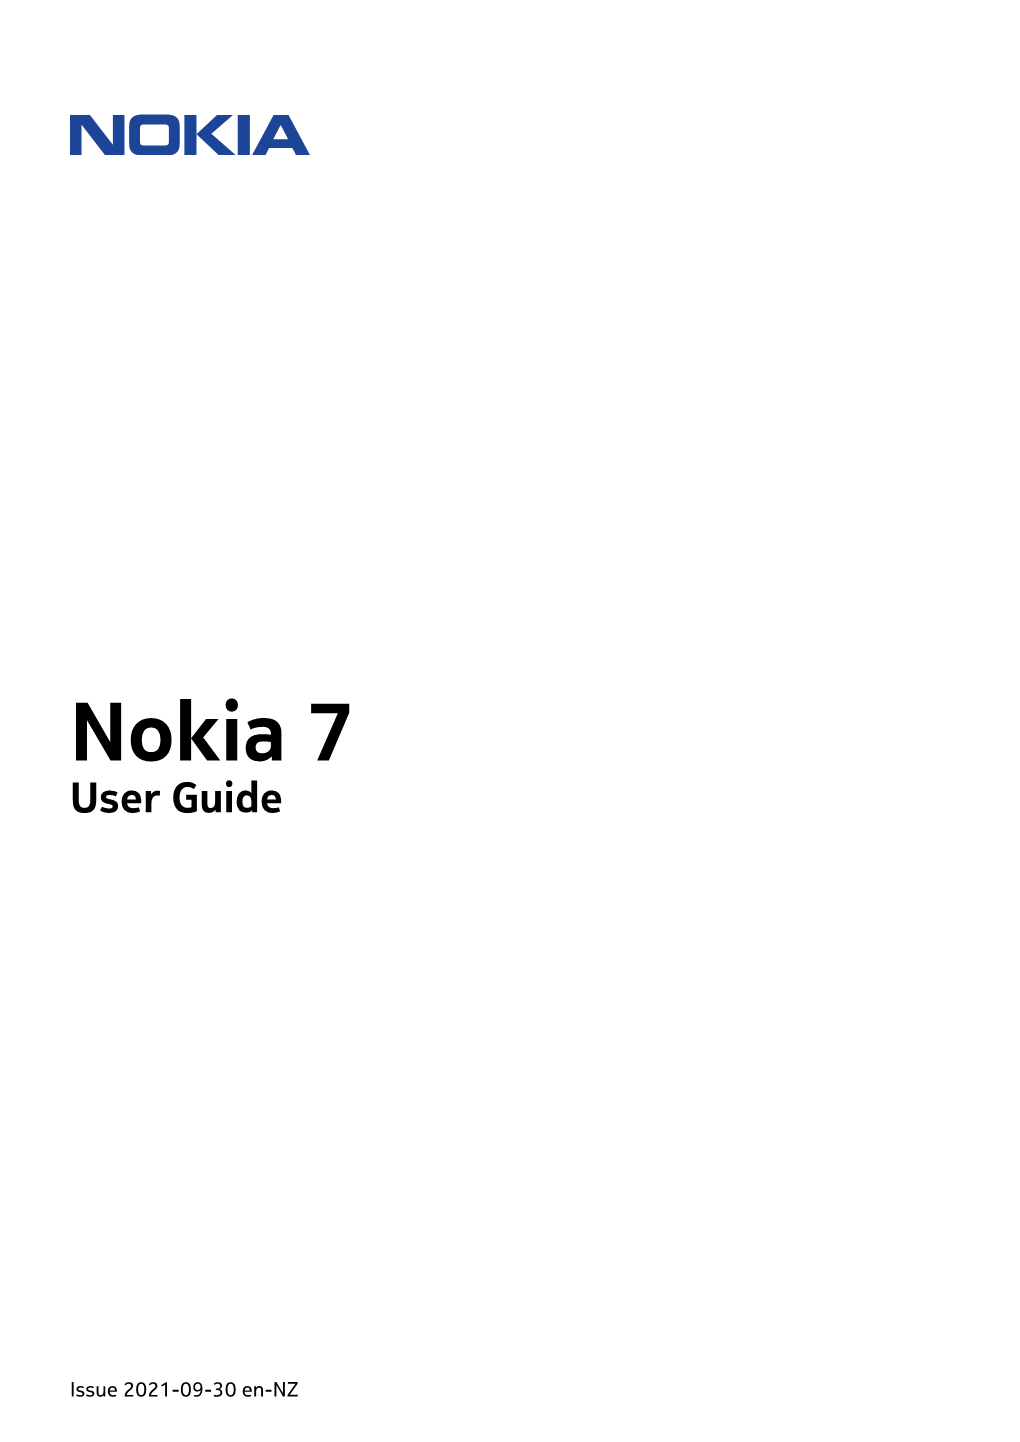 Nokia 7 User Guide